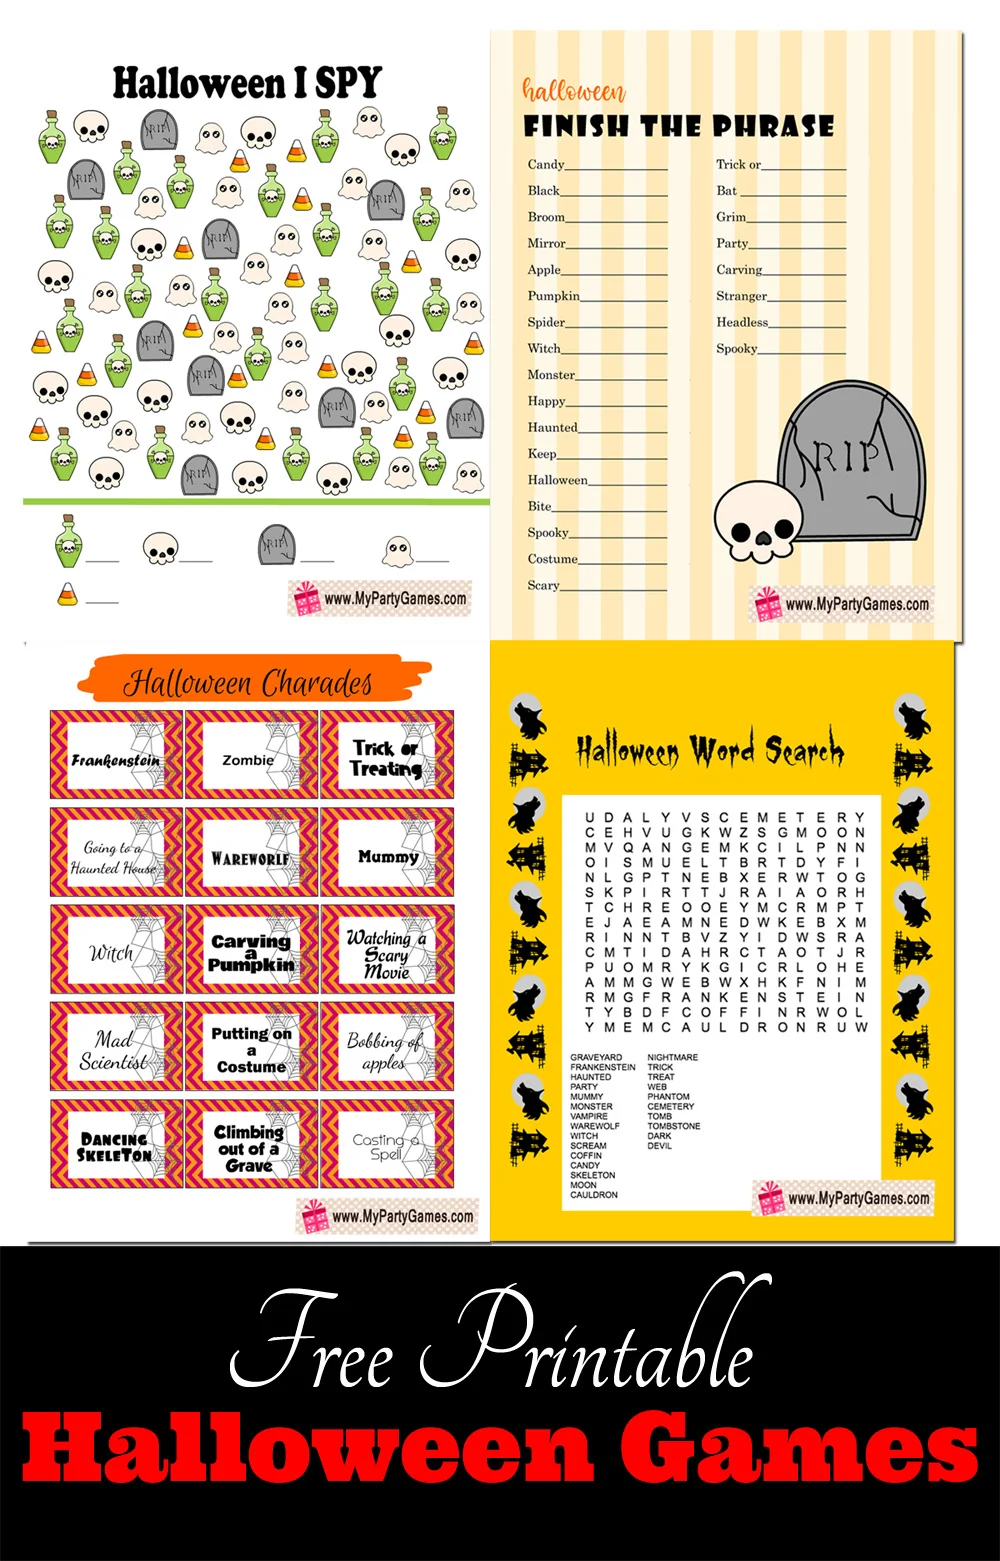 Halloween Games - Play halloween games online on Cookie Clicker